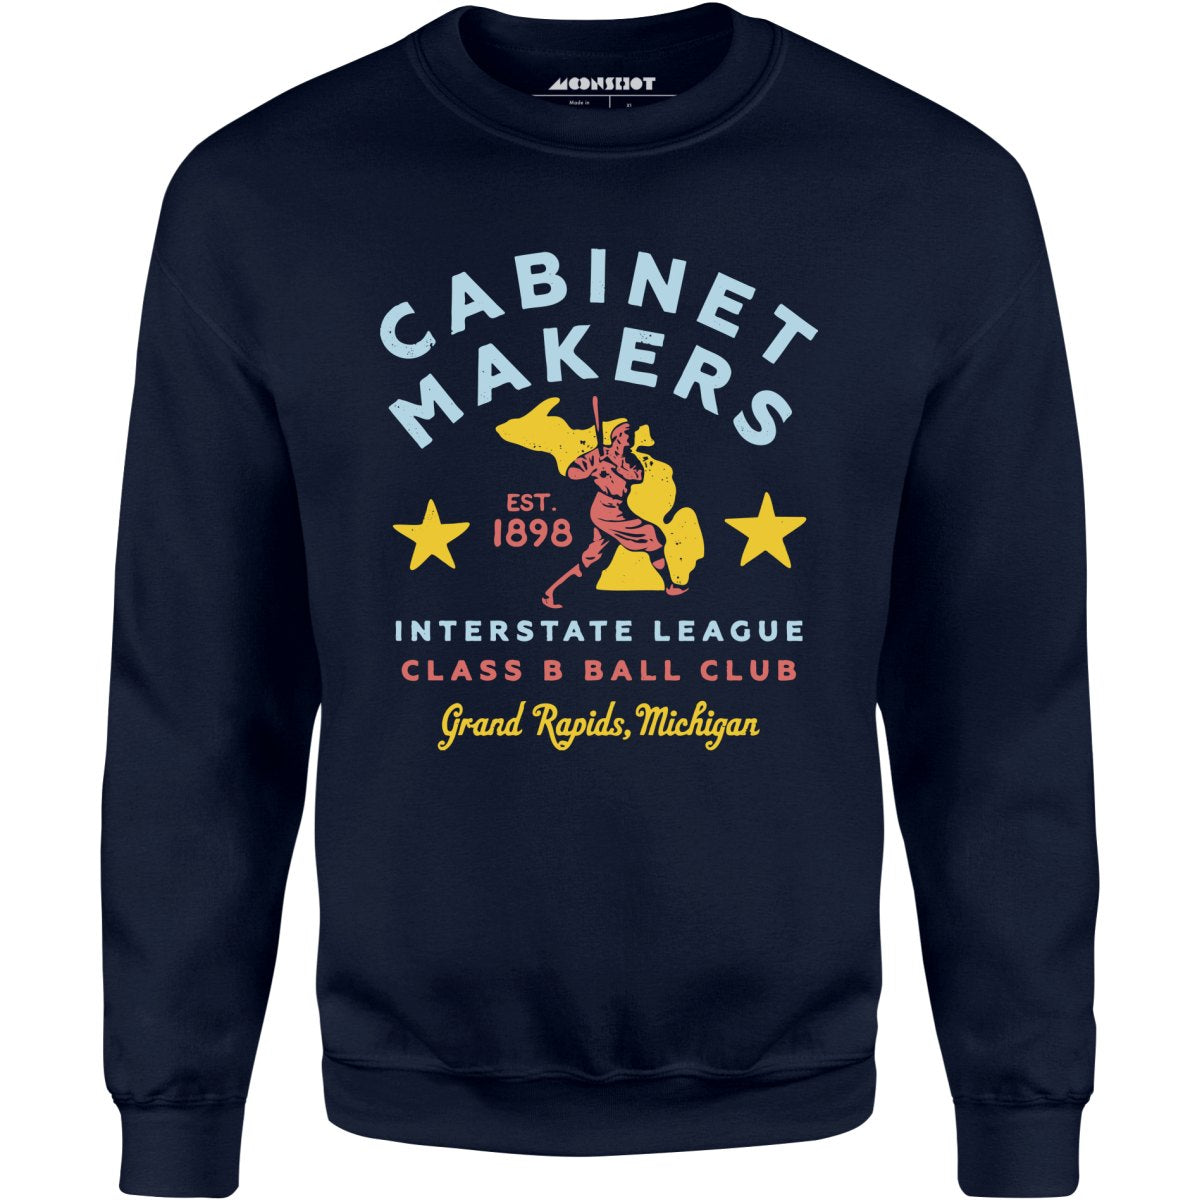 Grand Rapids Cabinet Makers - Michigan - Vintage Defunct Baseball Teams - Unisex Sweatshirt